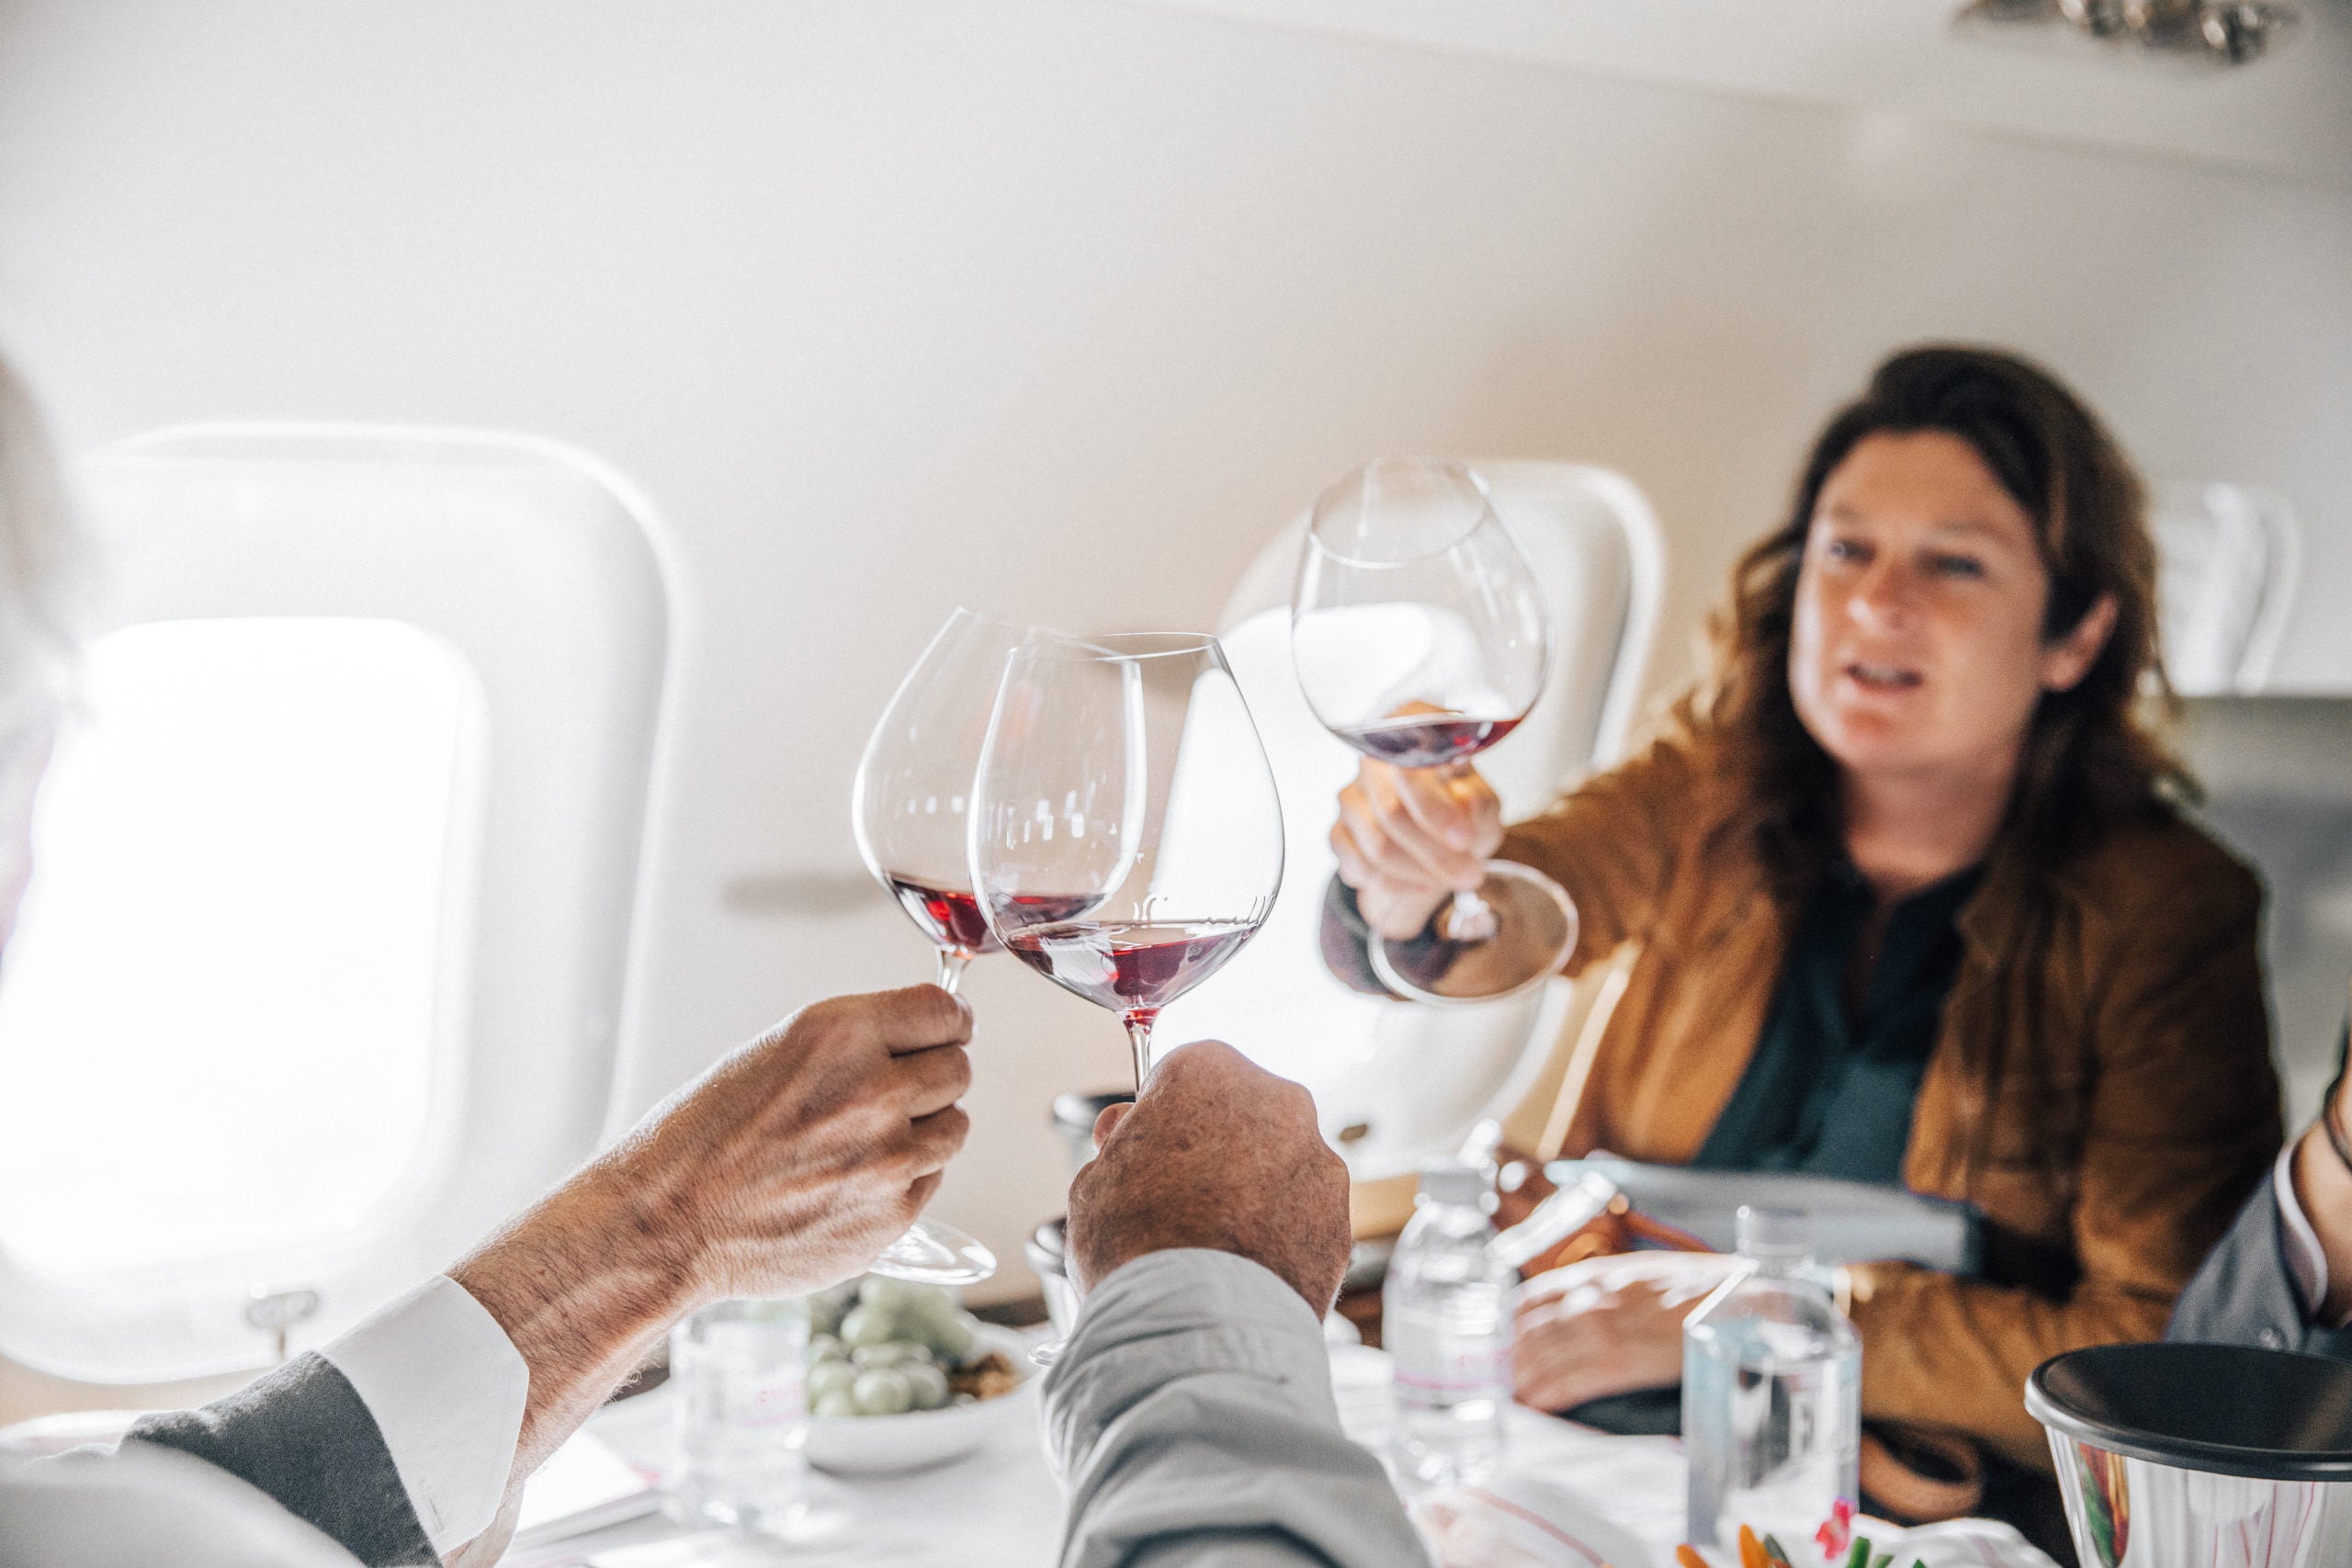 Wine on Airplanes